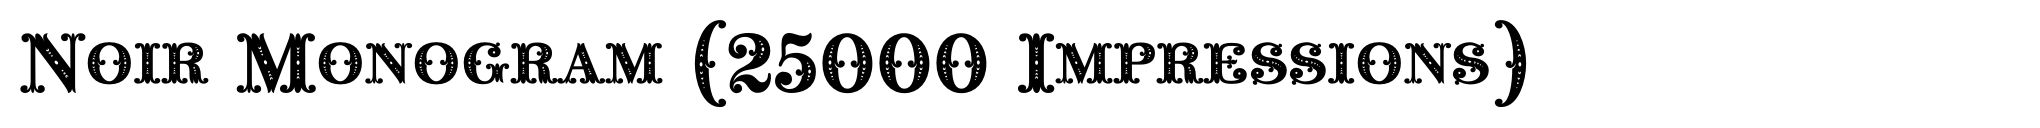 Noir Monogram (25000 Impressions) image